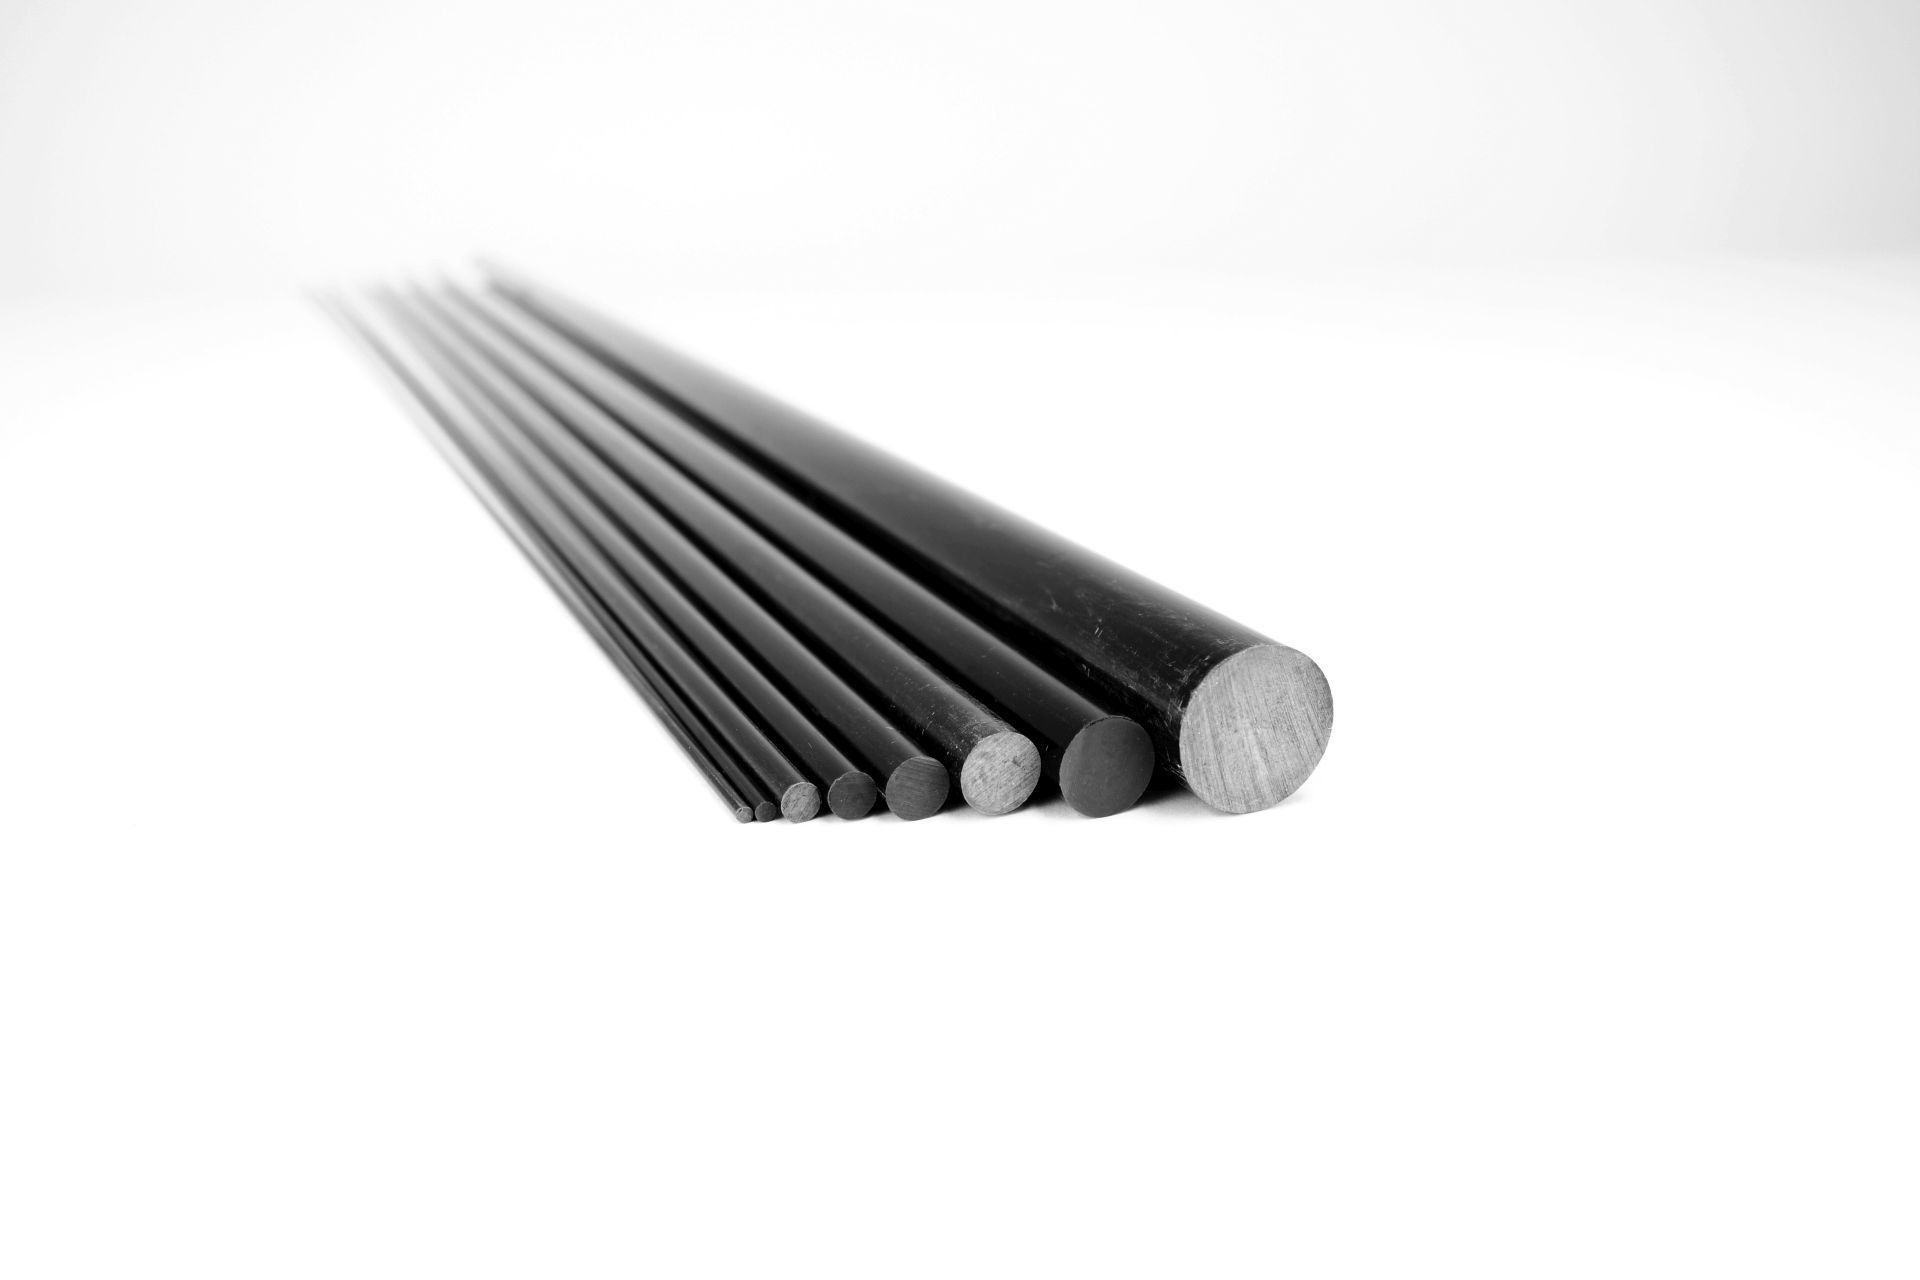 Carbon Composite - All rods